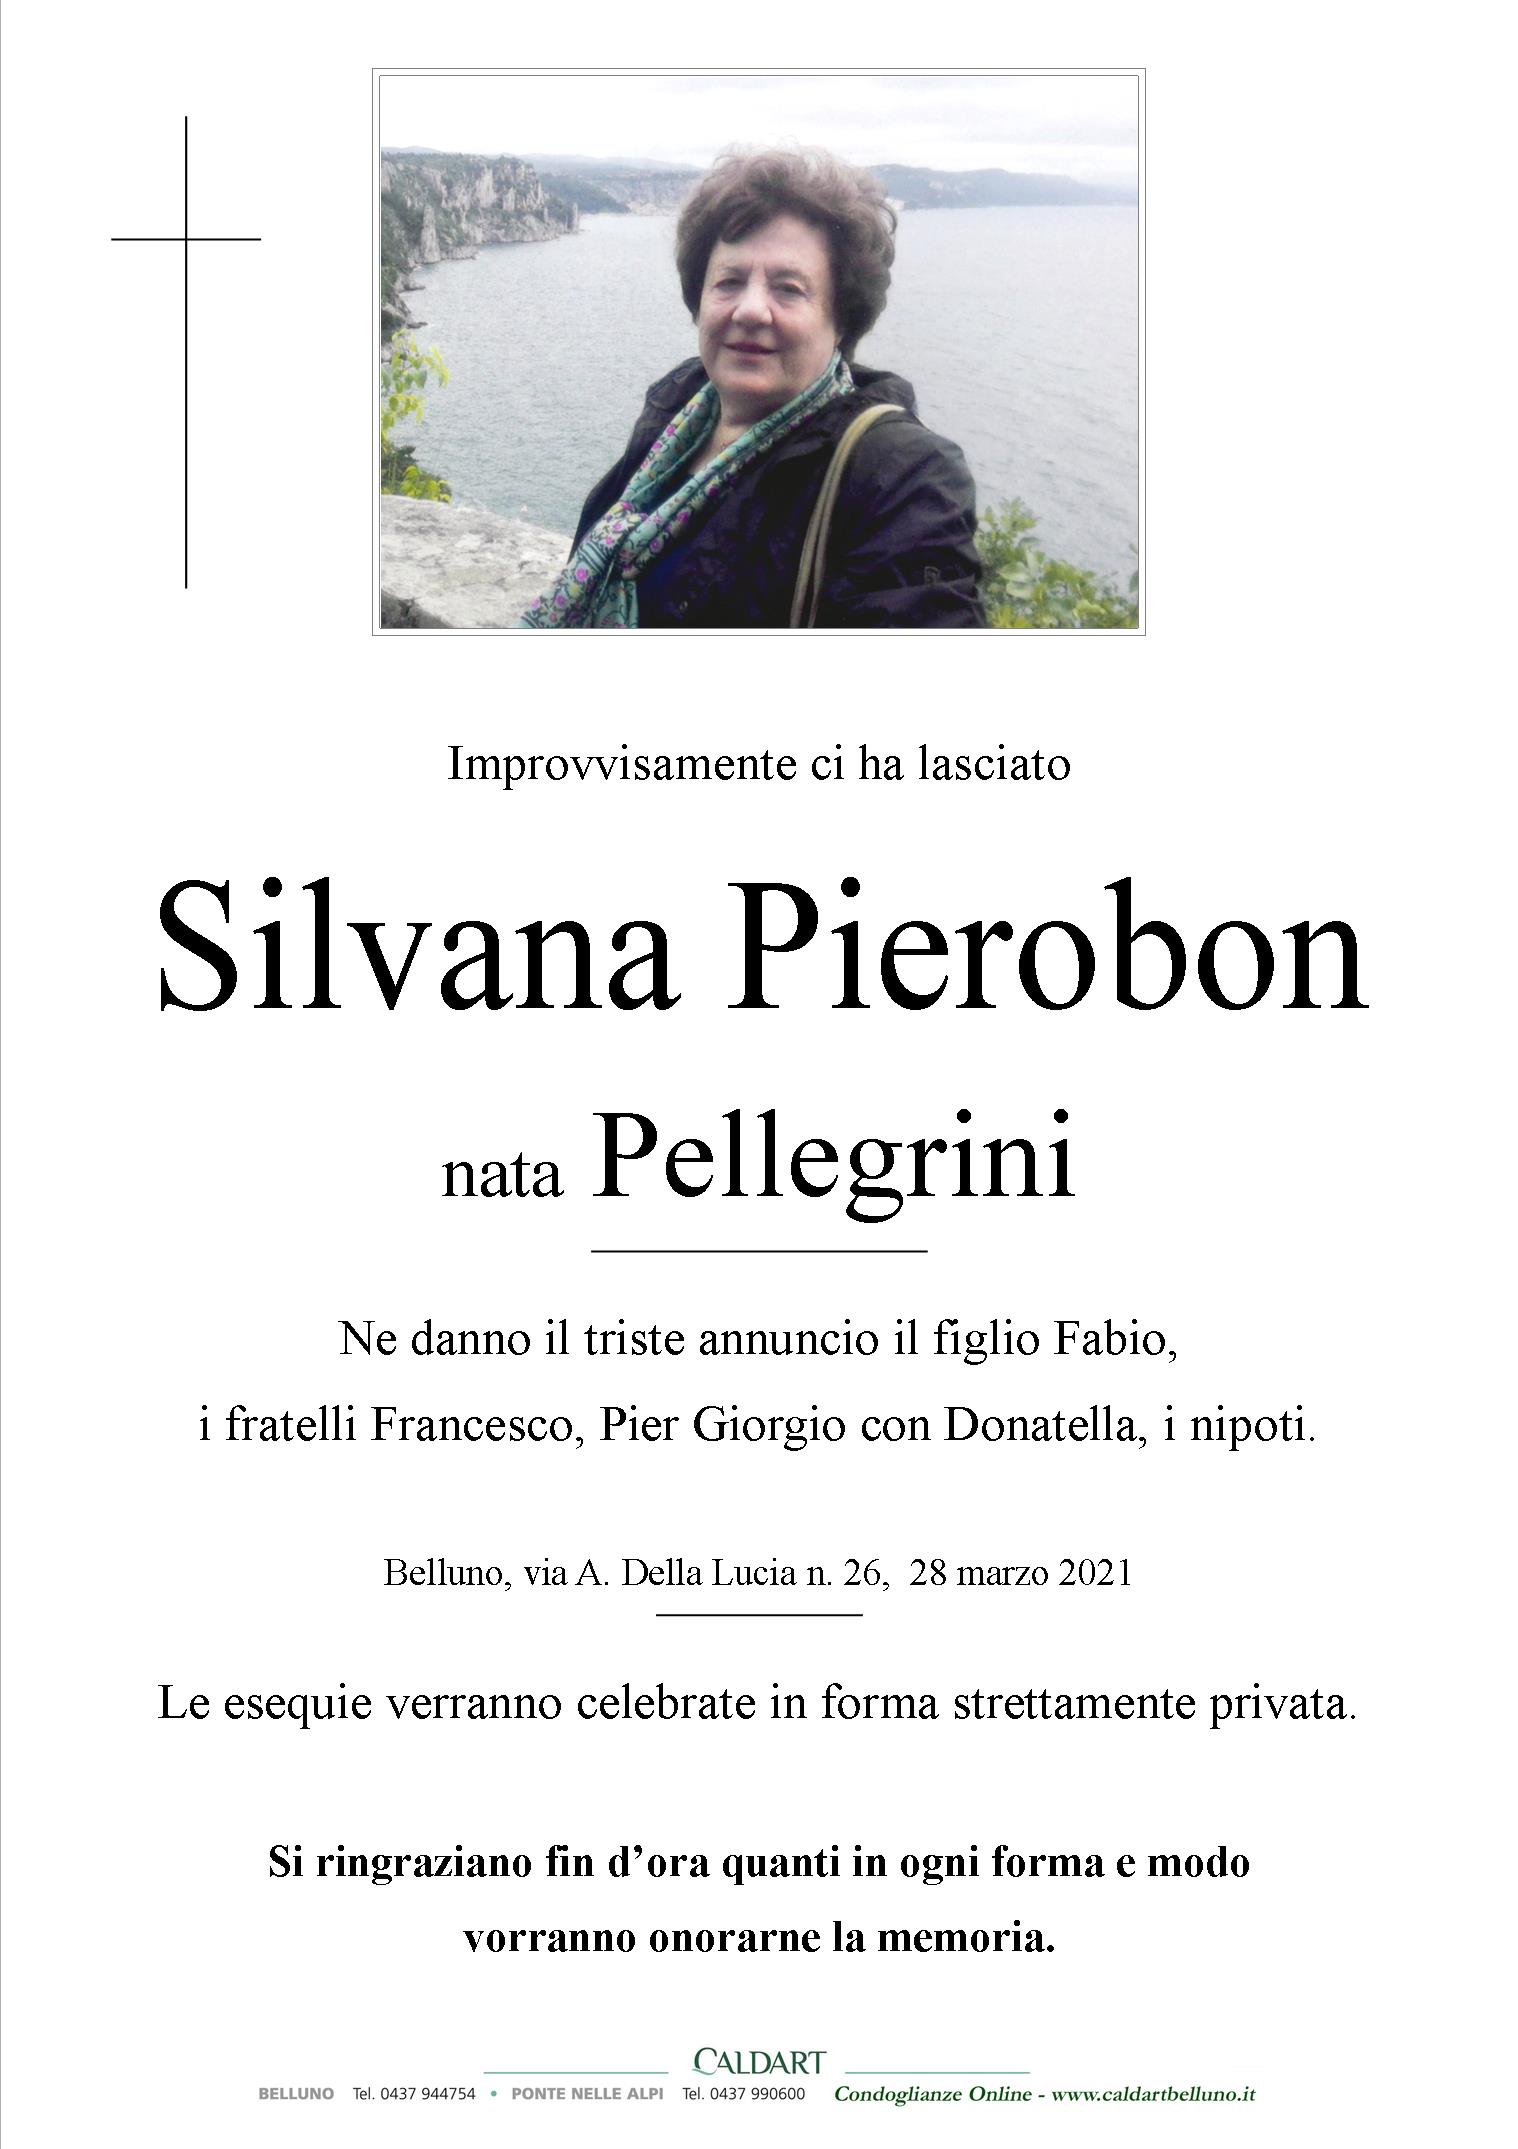 Silvana Pellegrini